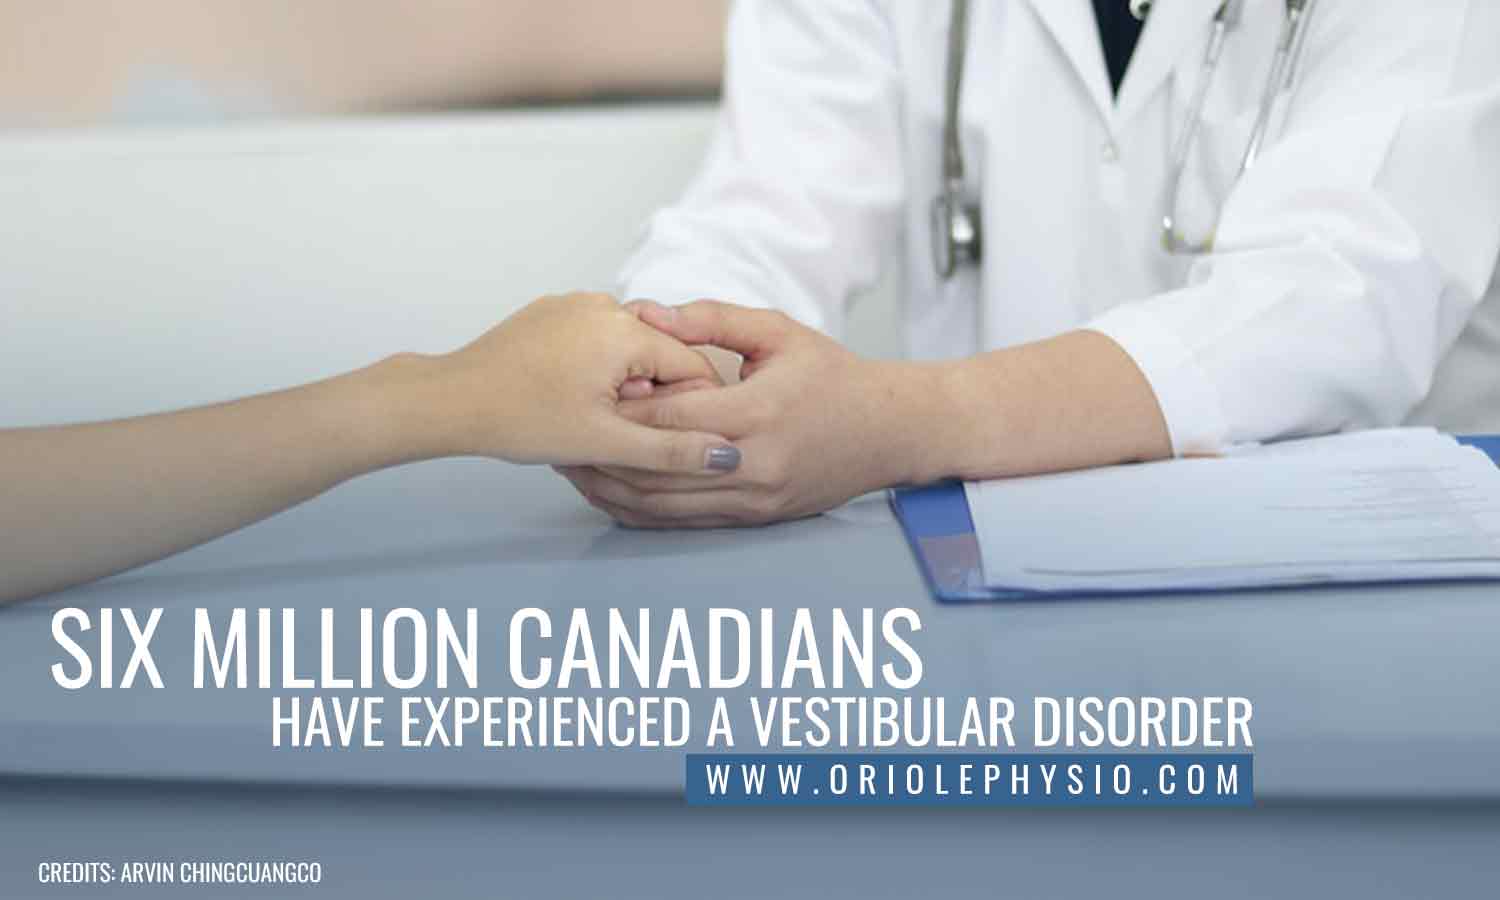 Six million Canadians have experienced a vestibular disorder